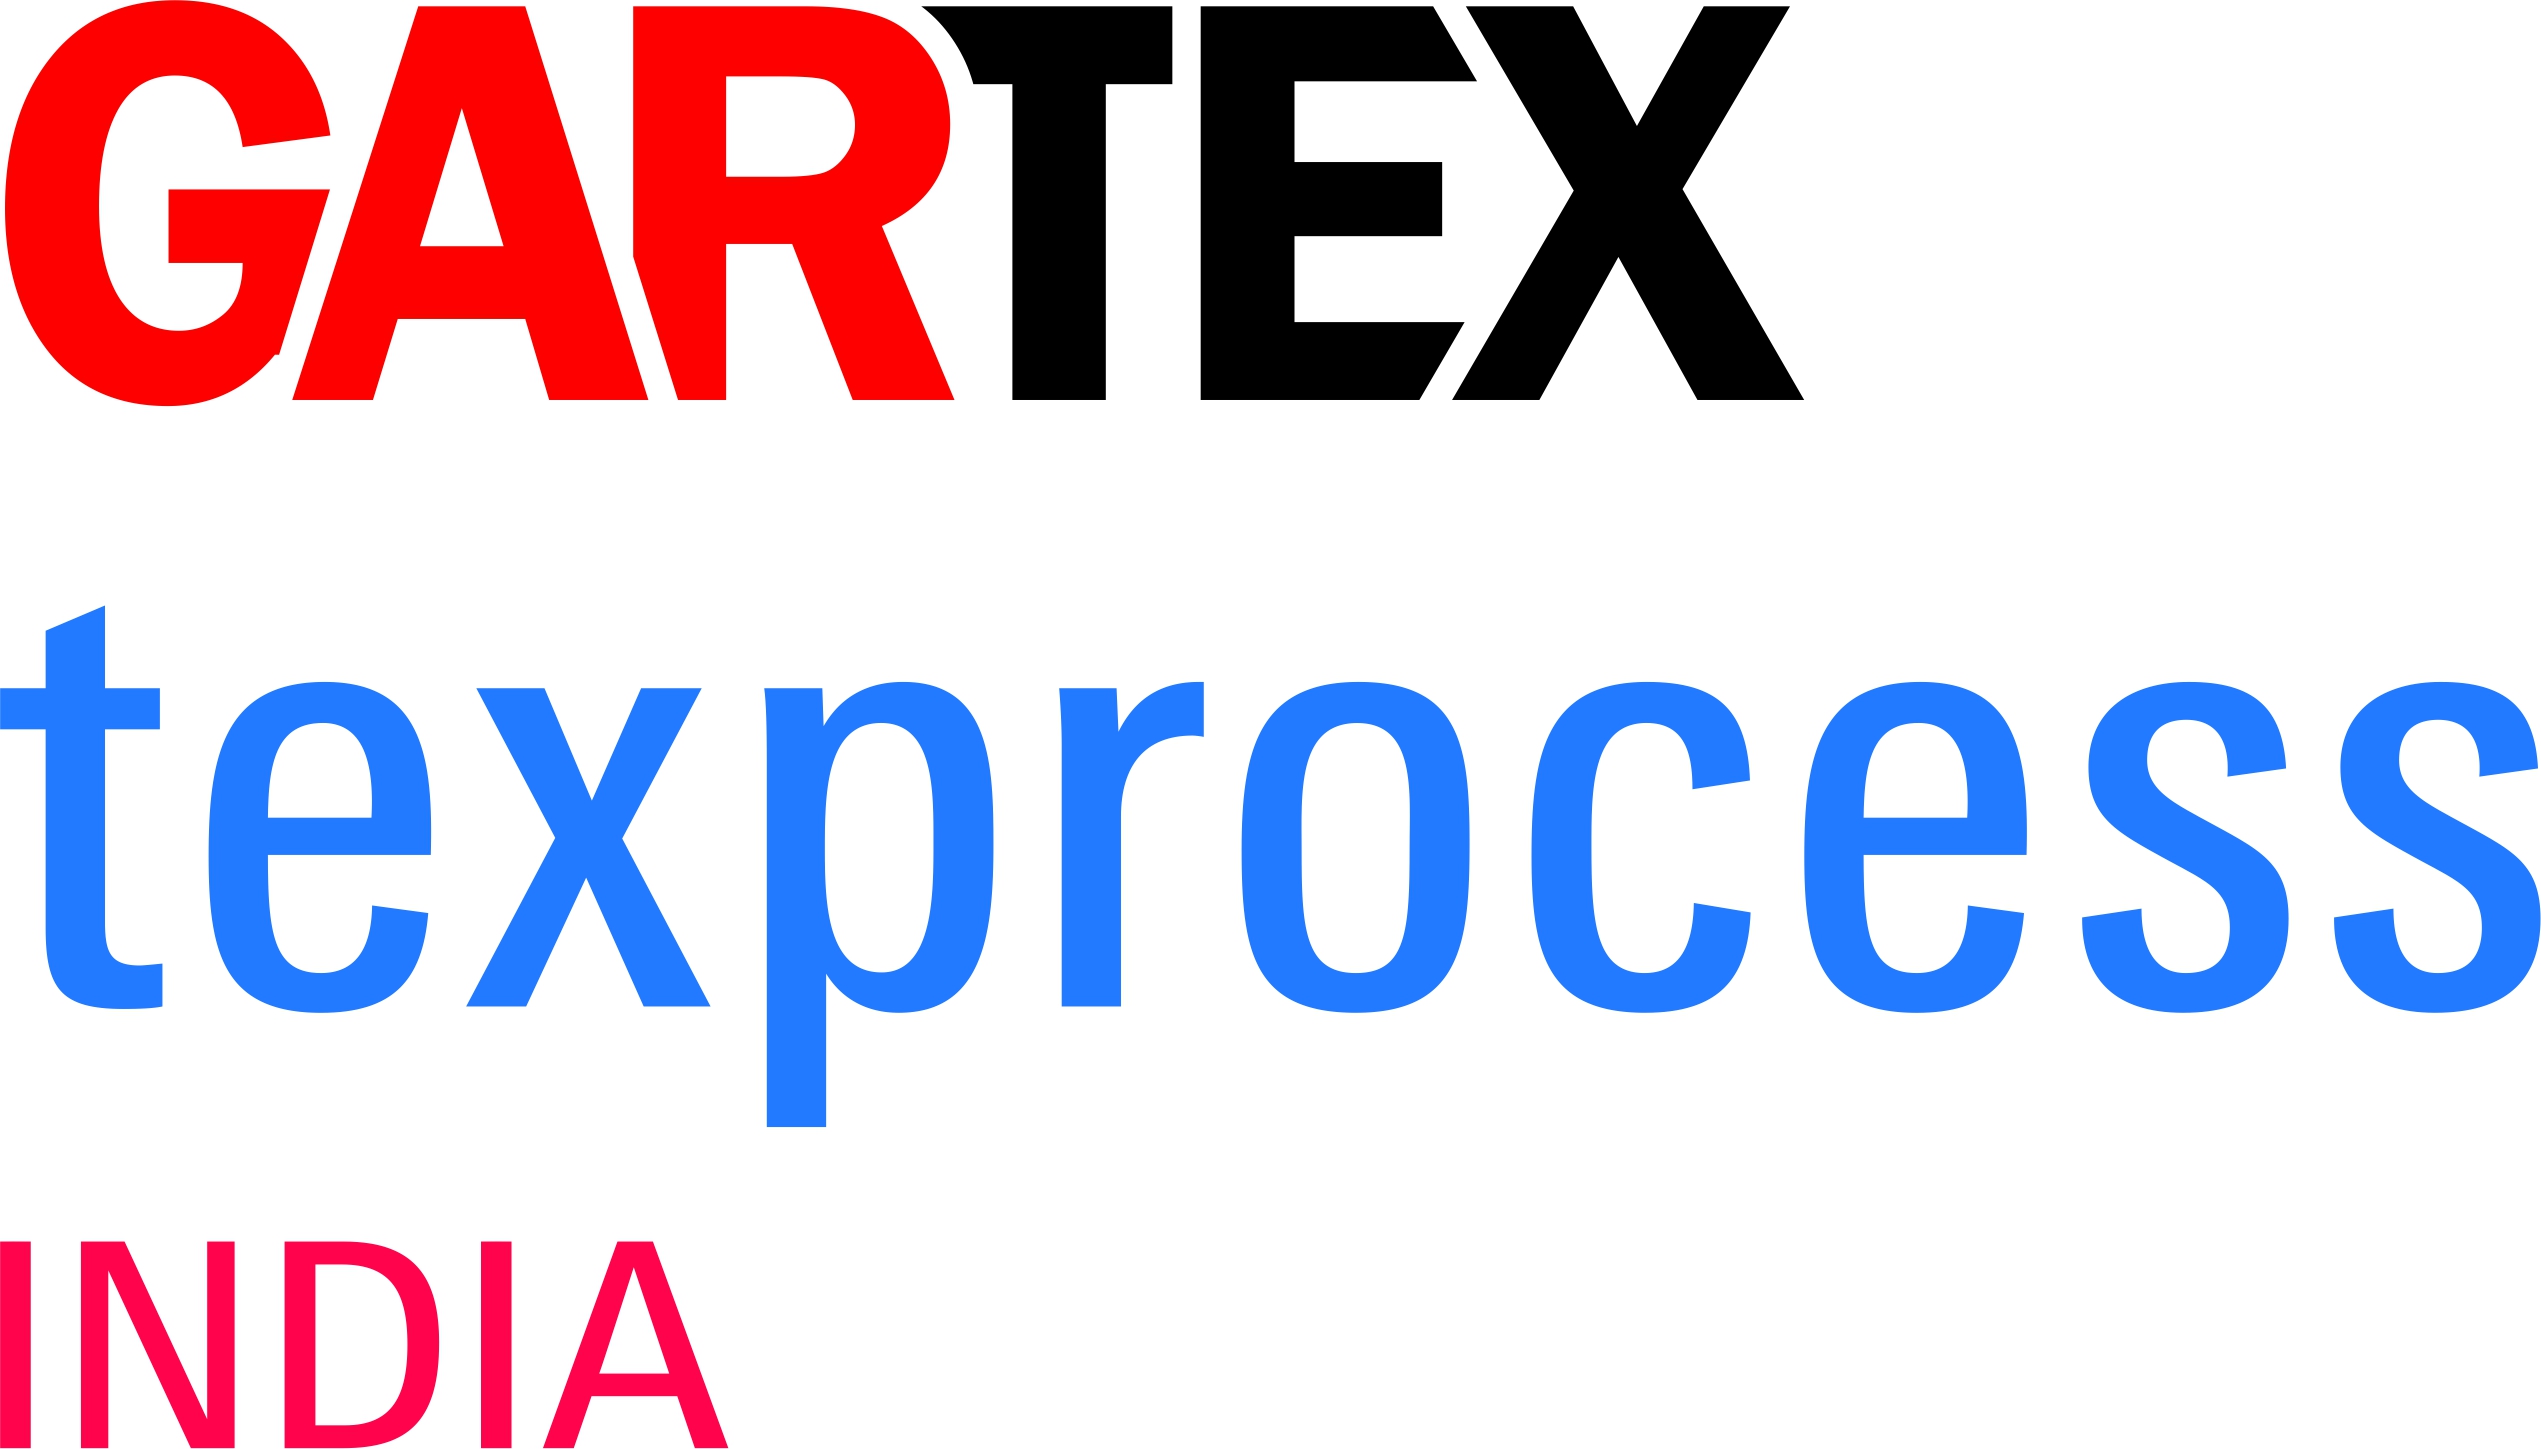 GARTEX TEXPROCESS INDIA 2021-MUMBAI, Mumbai, Maharashtra, India